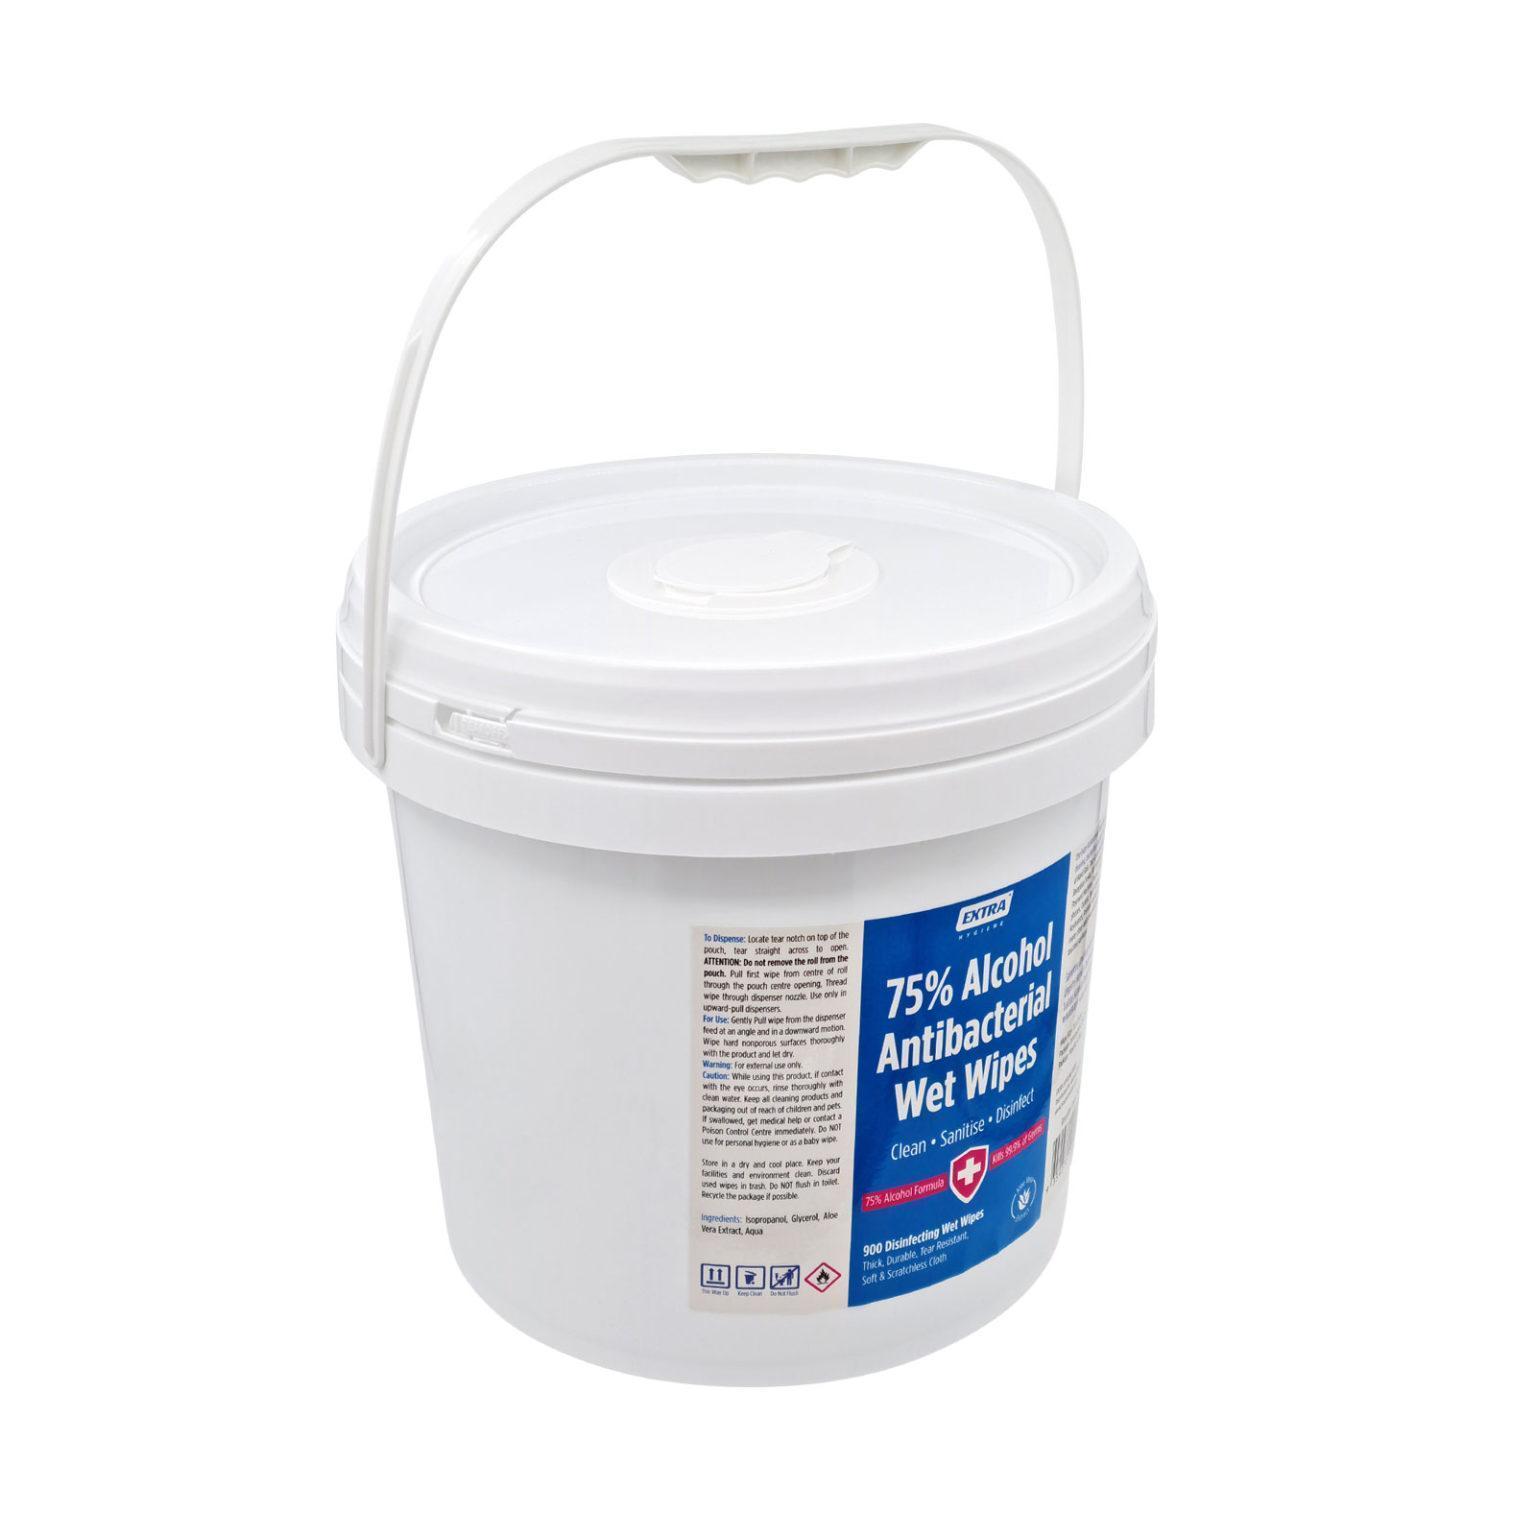 Extra 75% Alcohol Antibacterial Wet Wipe Dispenser Bucket with Handle